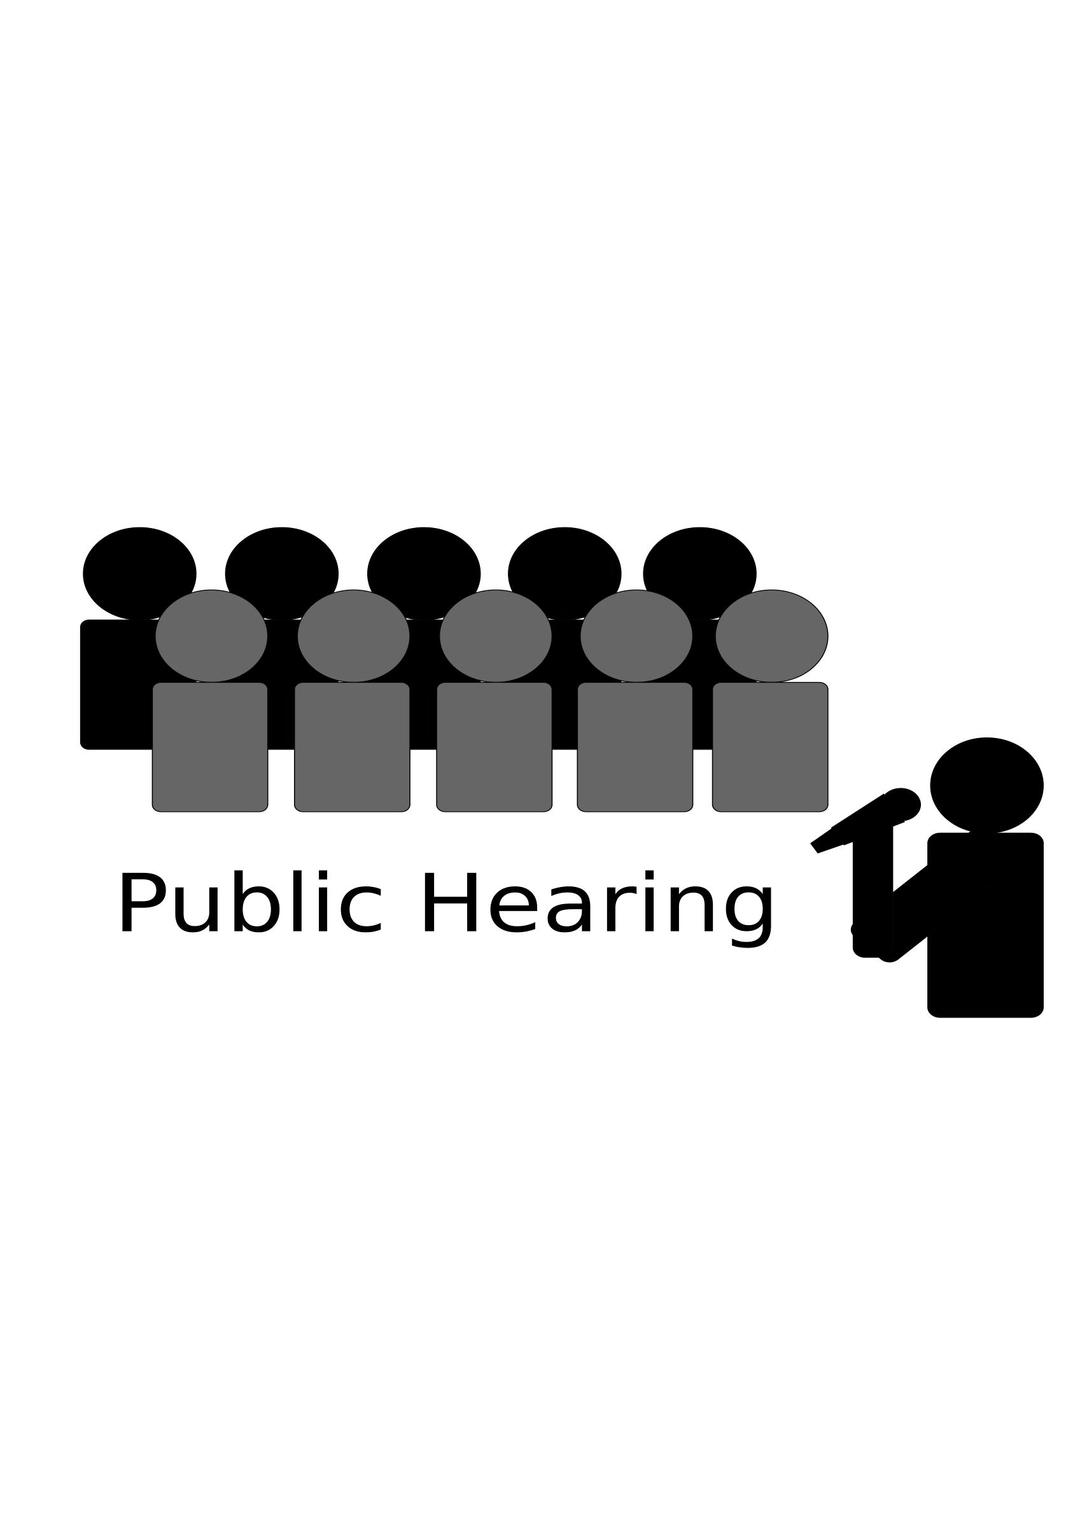 Public Hearing png transparent